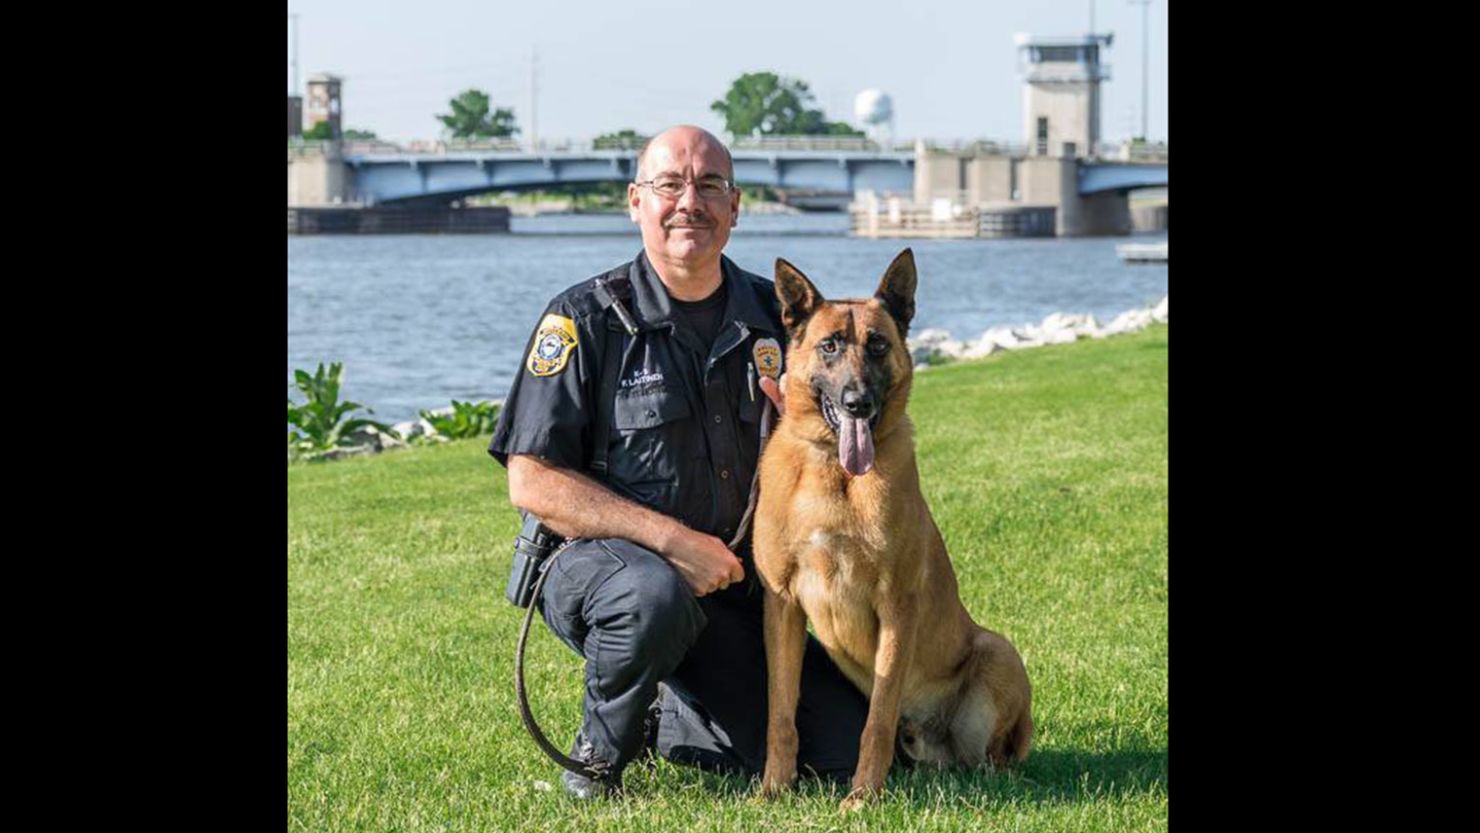 Officer Fred Laitinen kneels beside his canine partner "Cops".